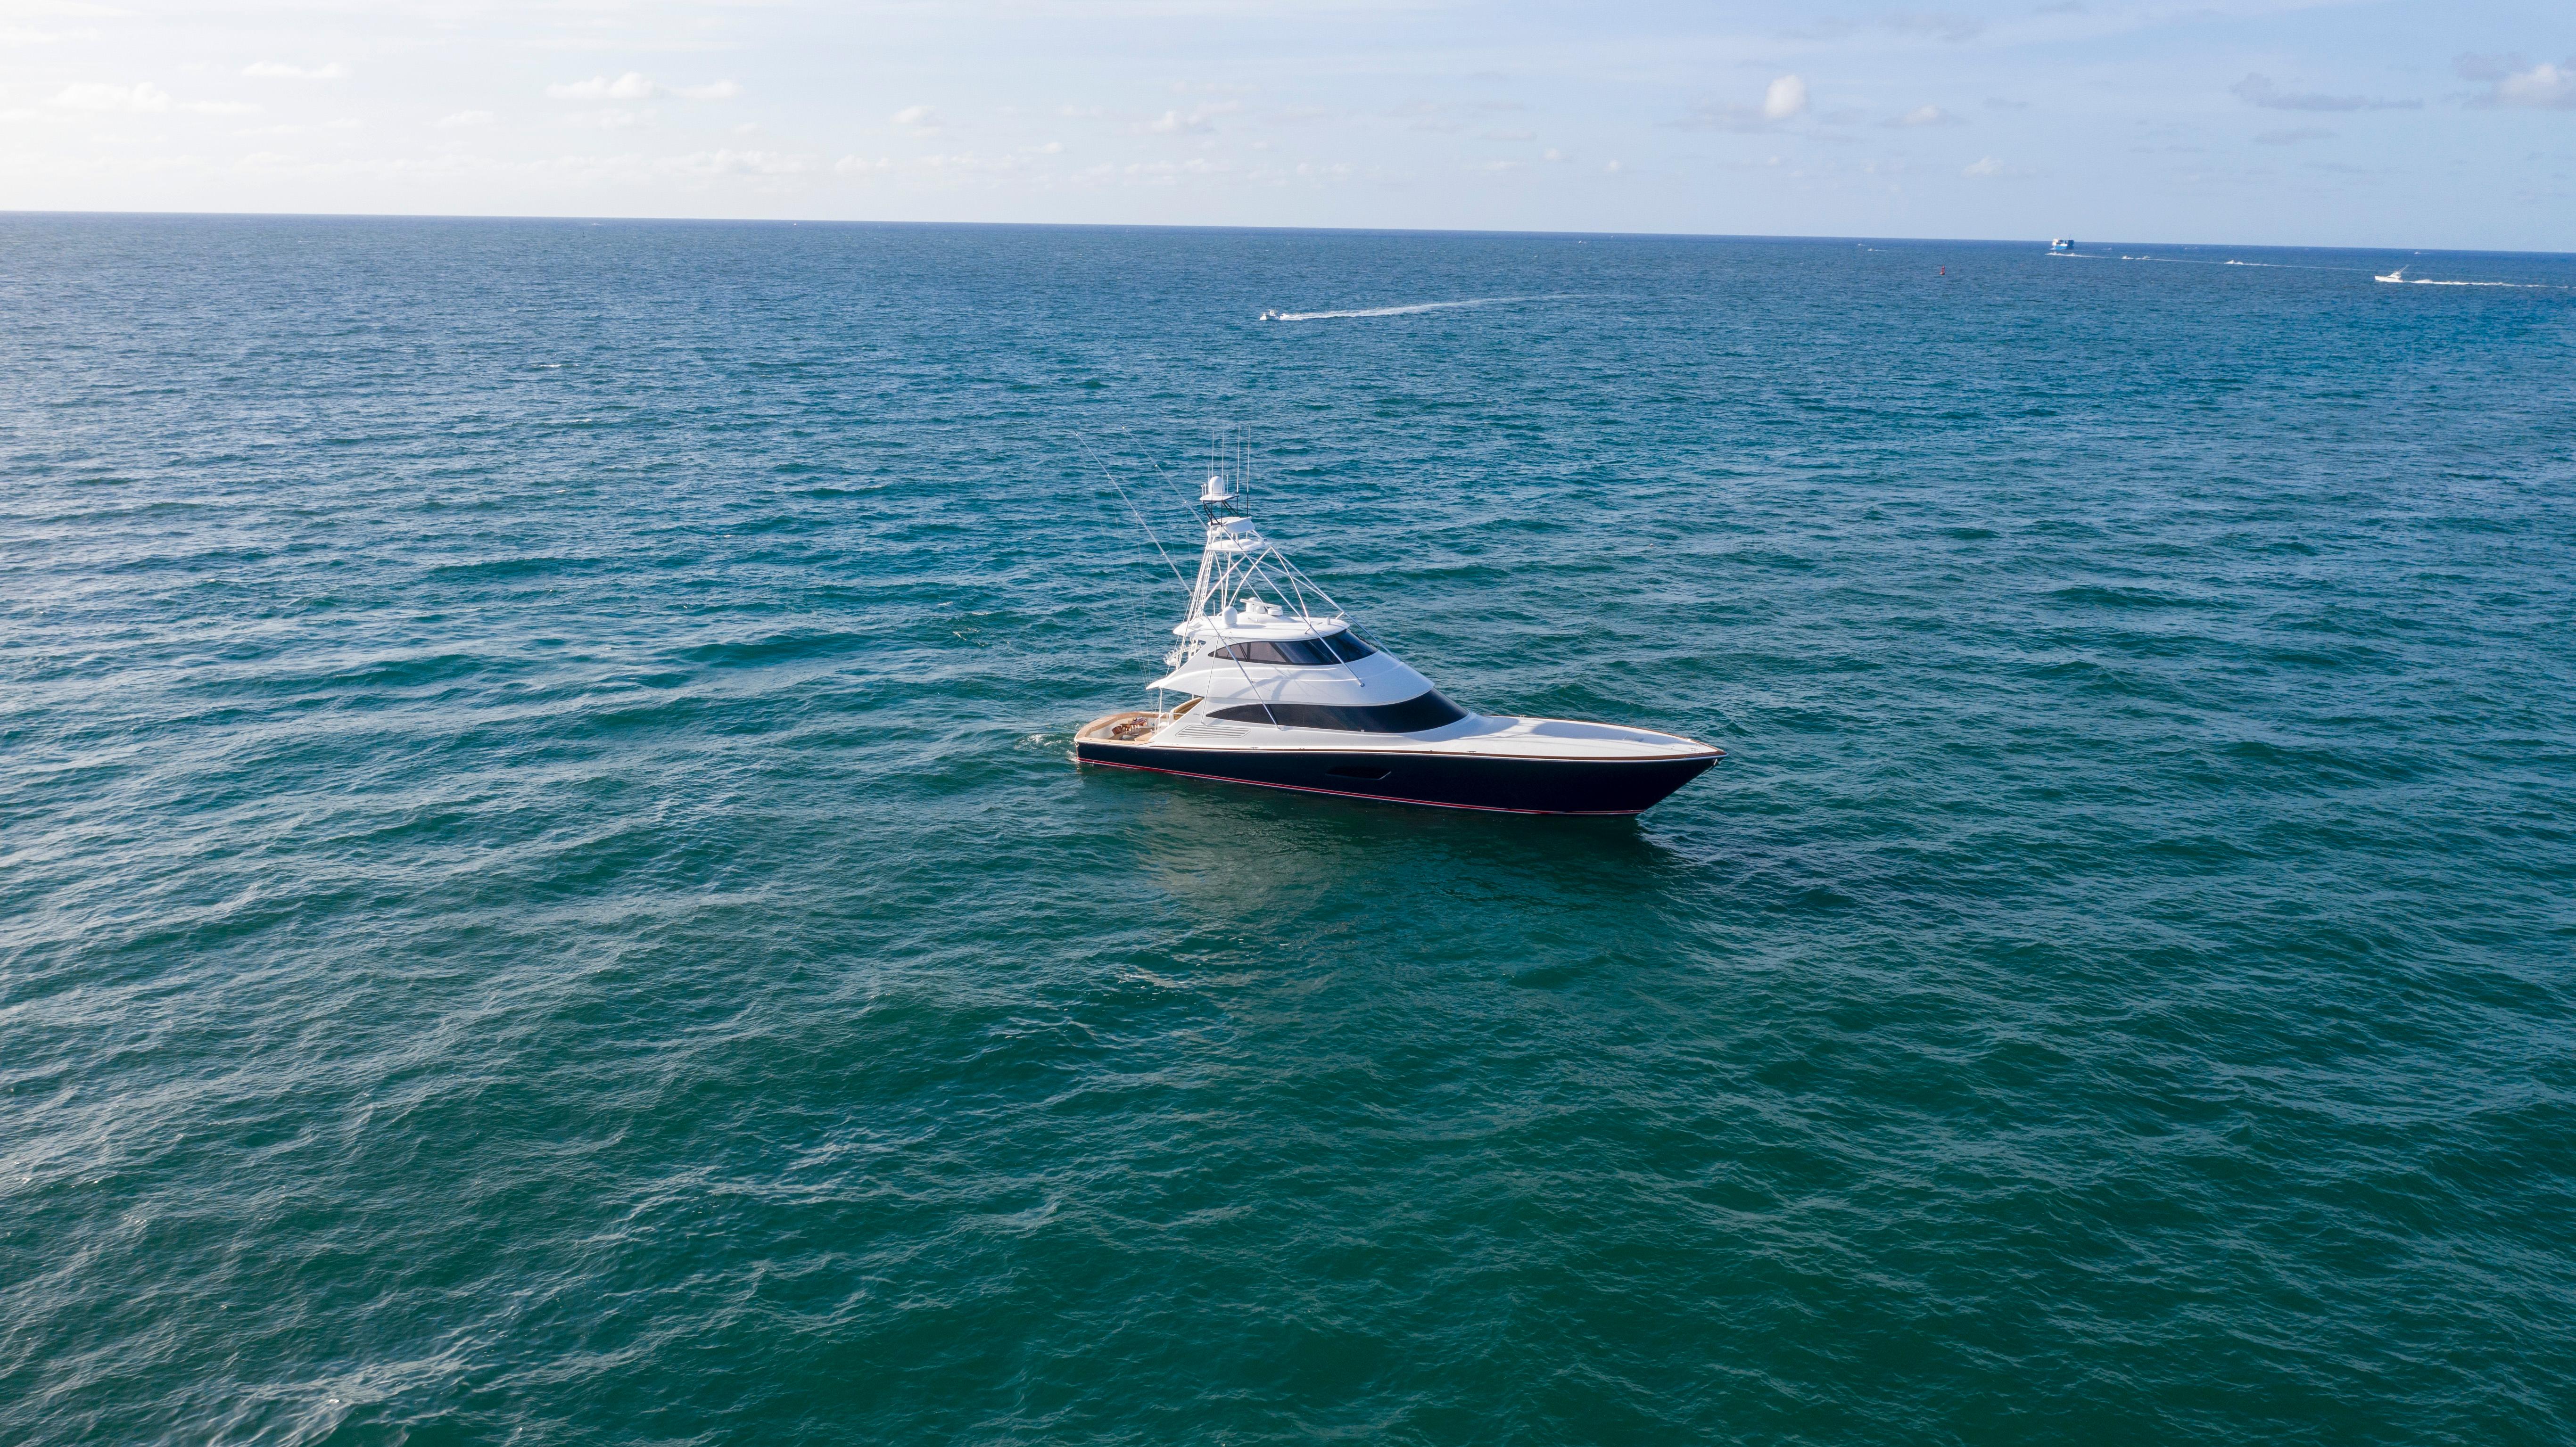 Speculator Yacht Photos Pics Viking 92 Speculator-Profile